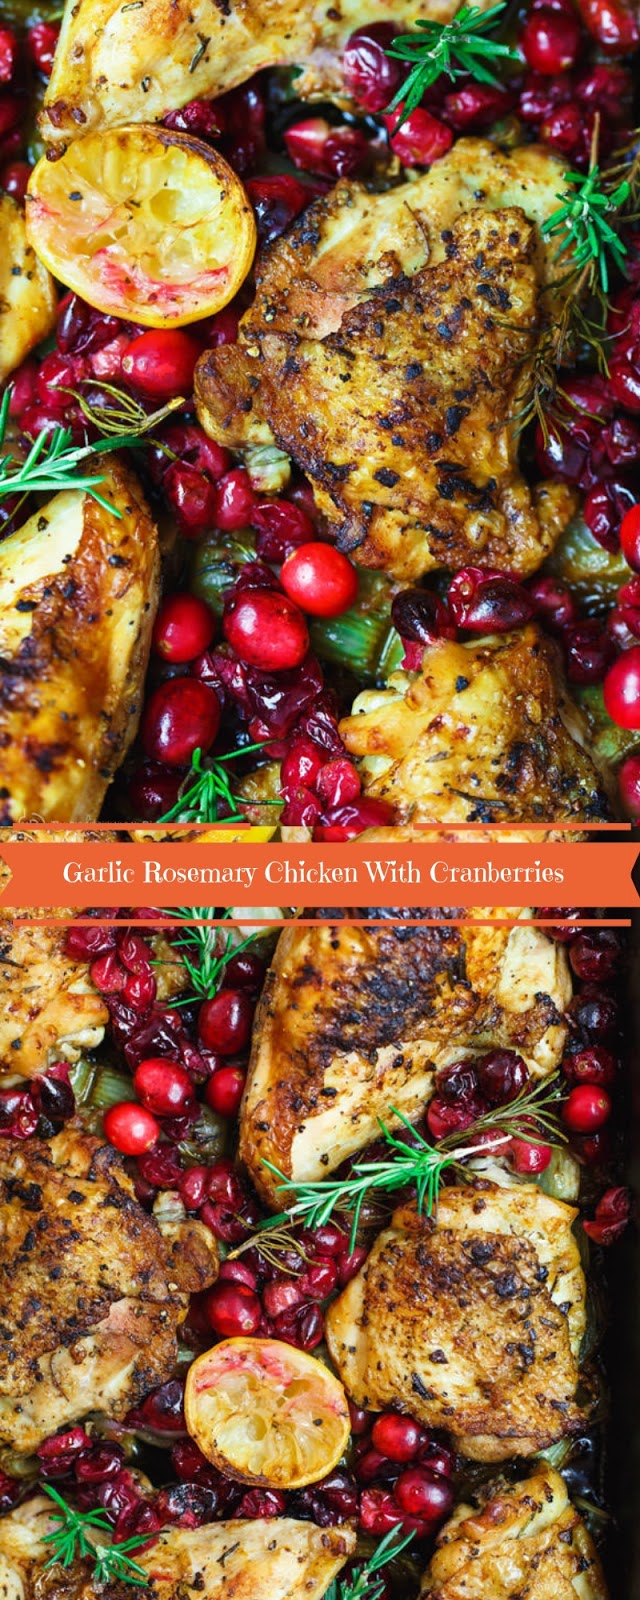 Garlic Rosemary Chicken With Cranberries